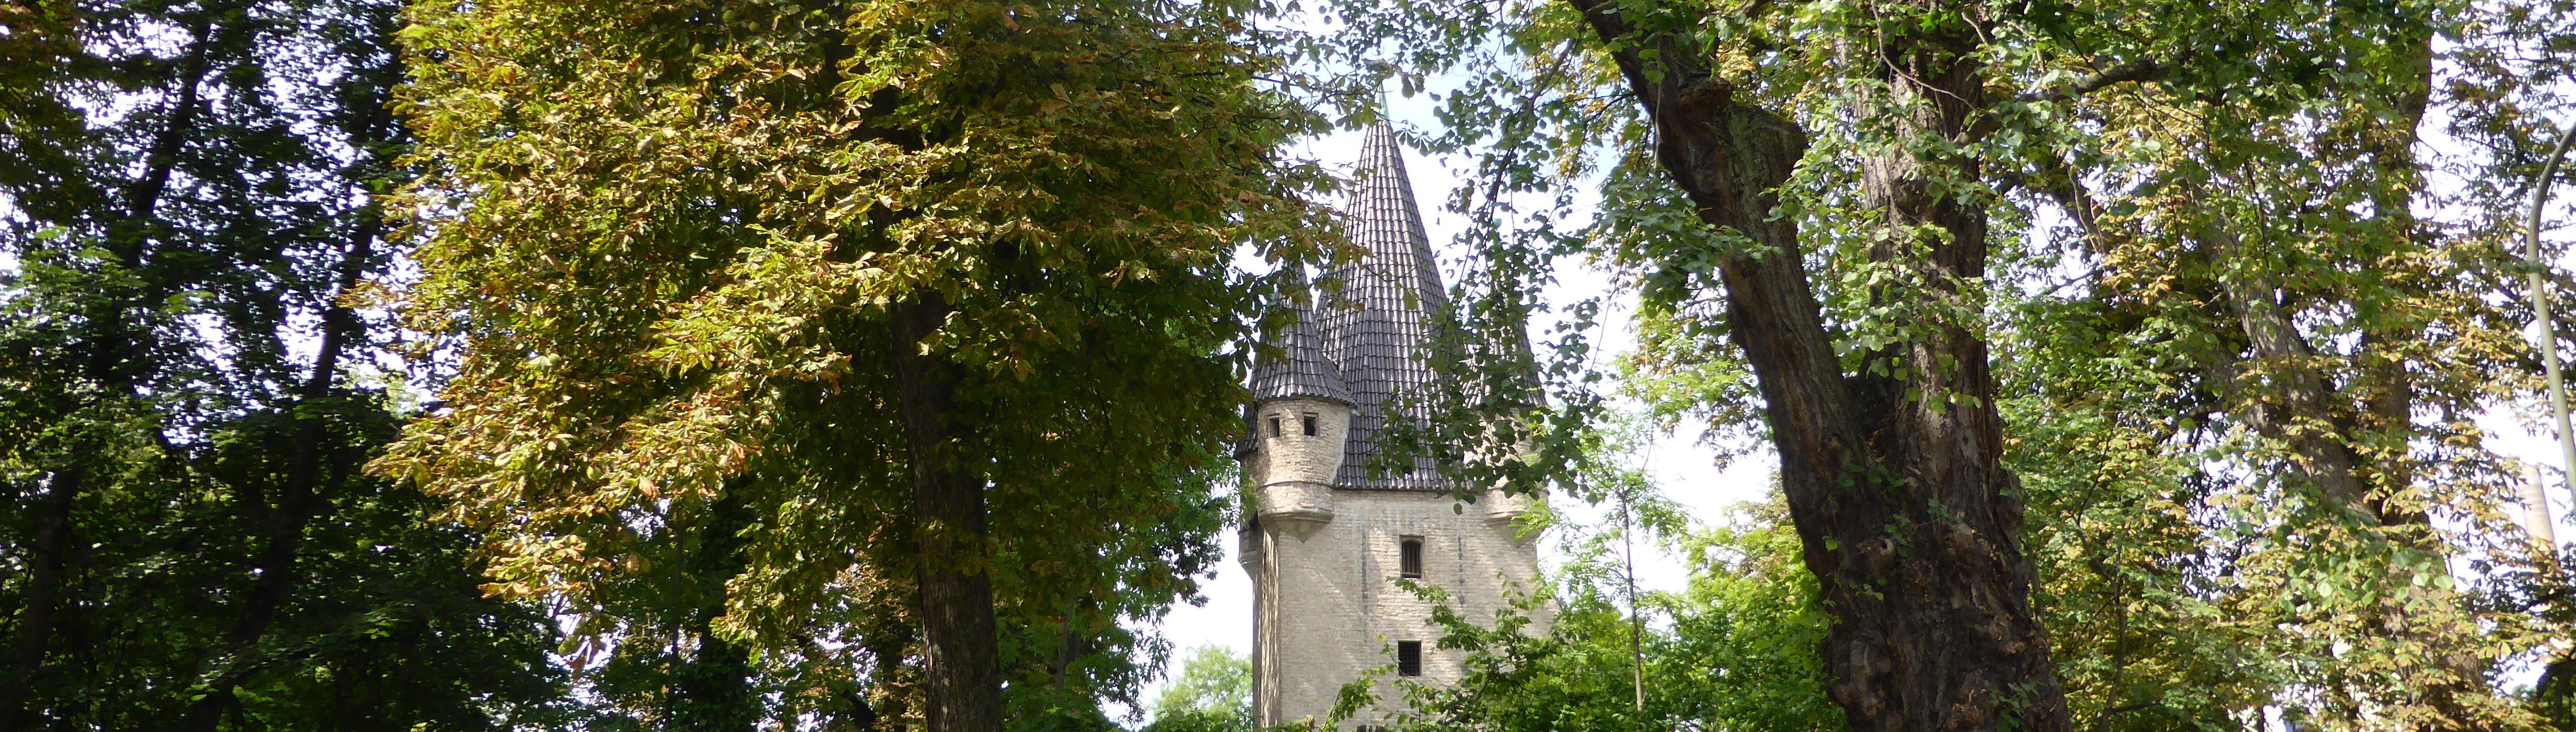 Turm (2)